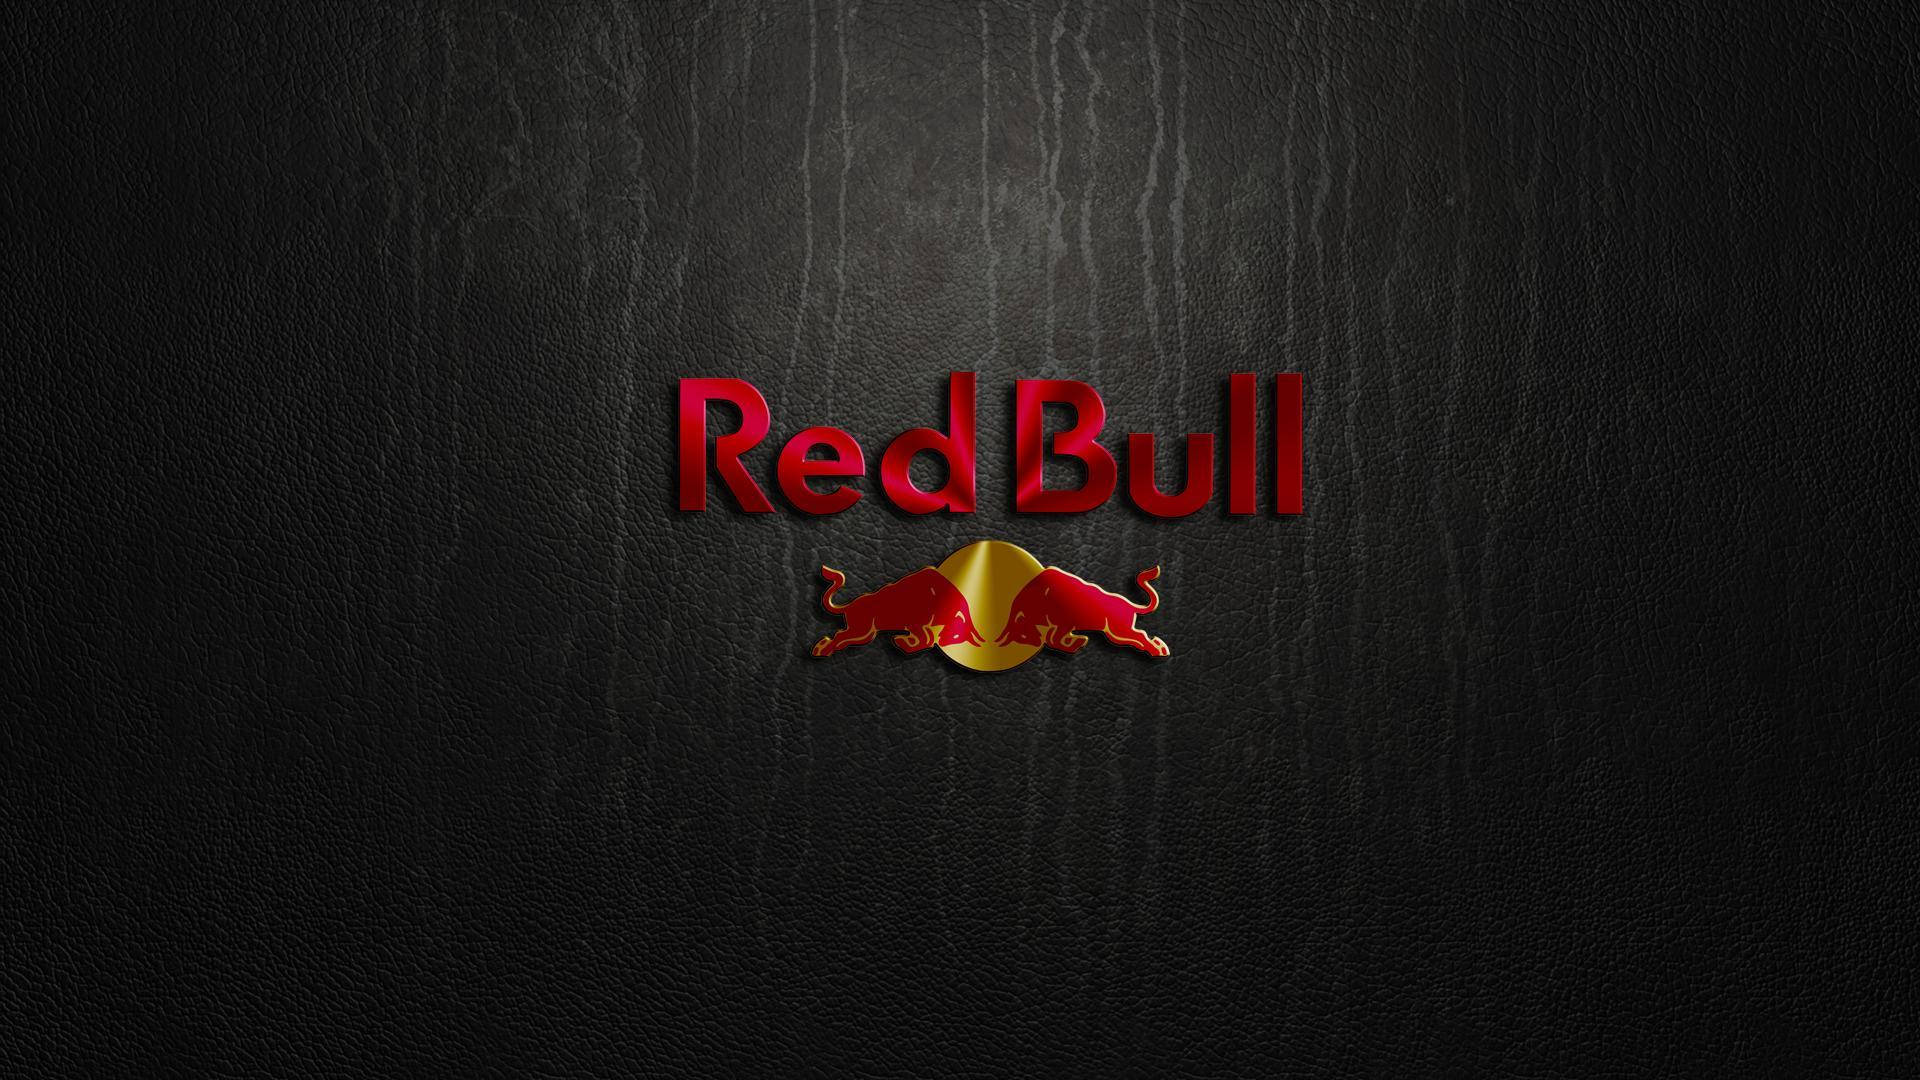 Cool Logos Red Bull